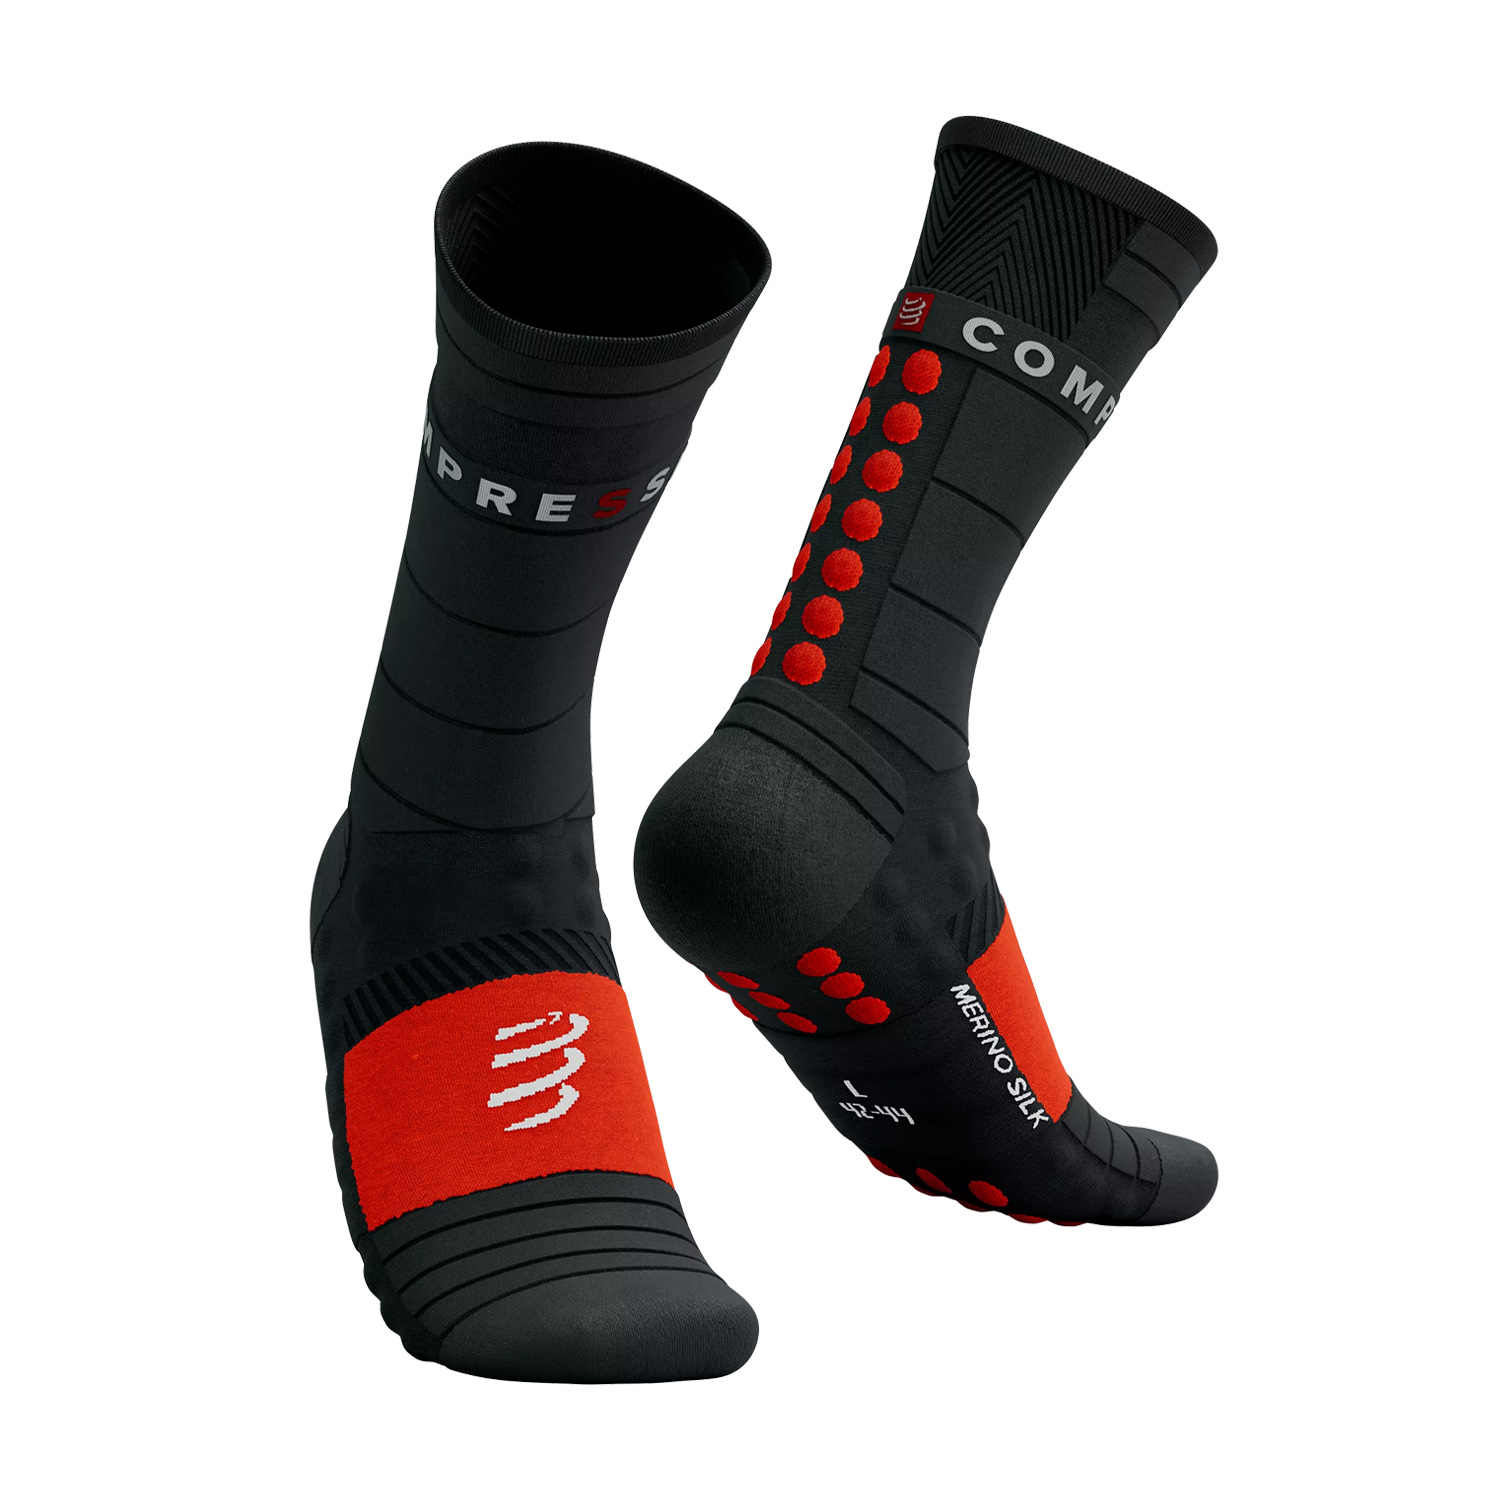 Compressport Pro Racing Winter Socks - Black/High Risk Red